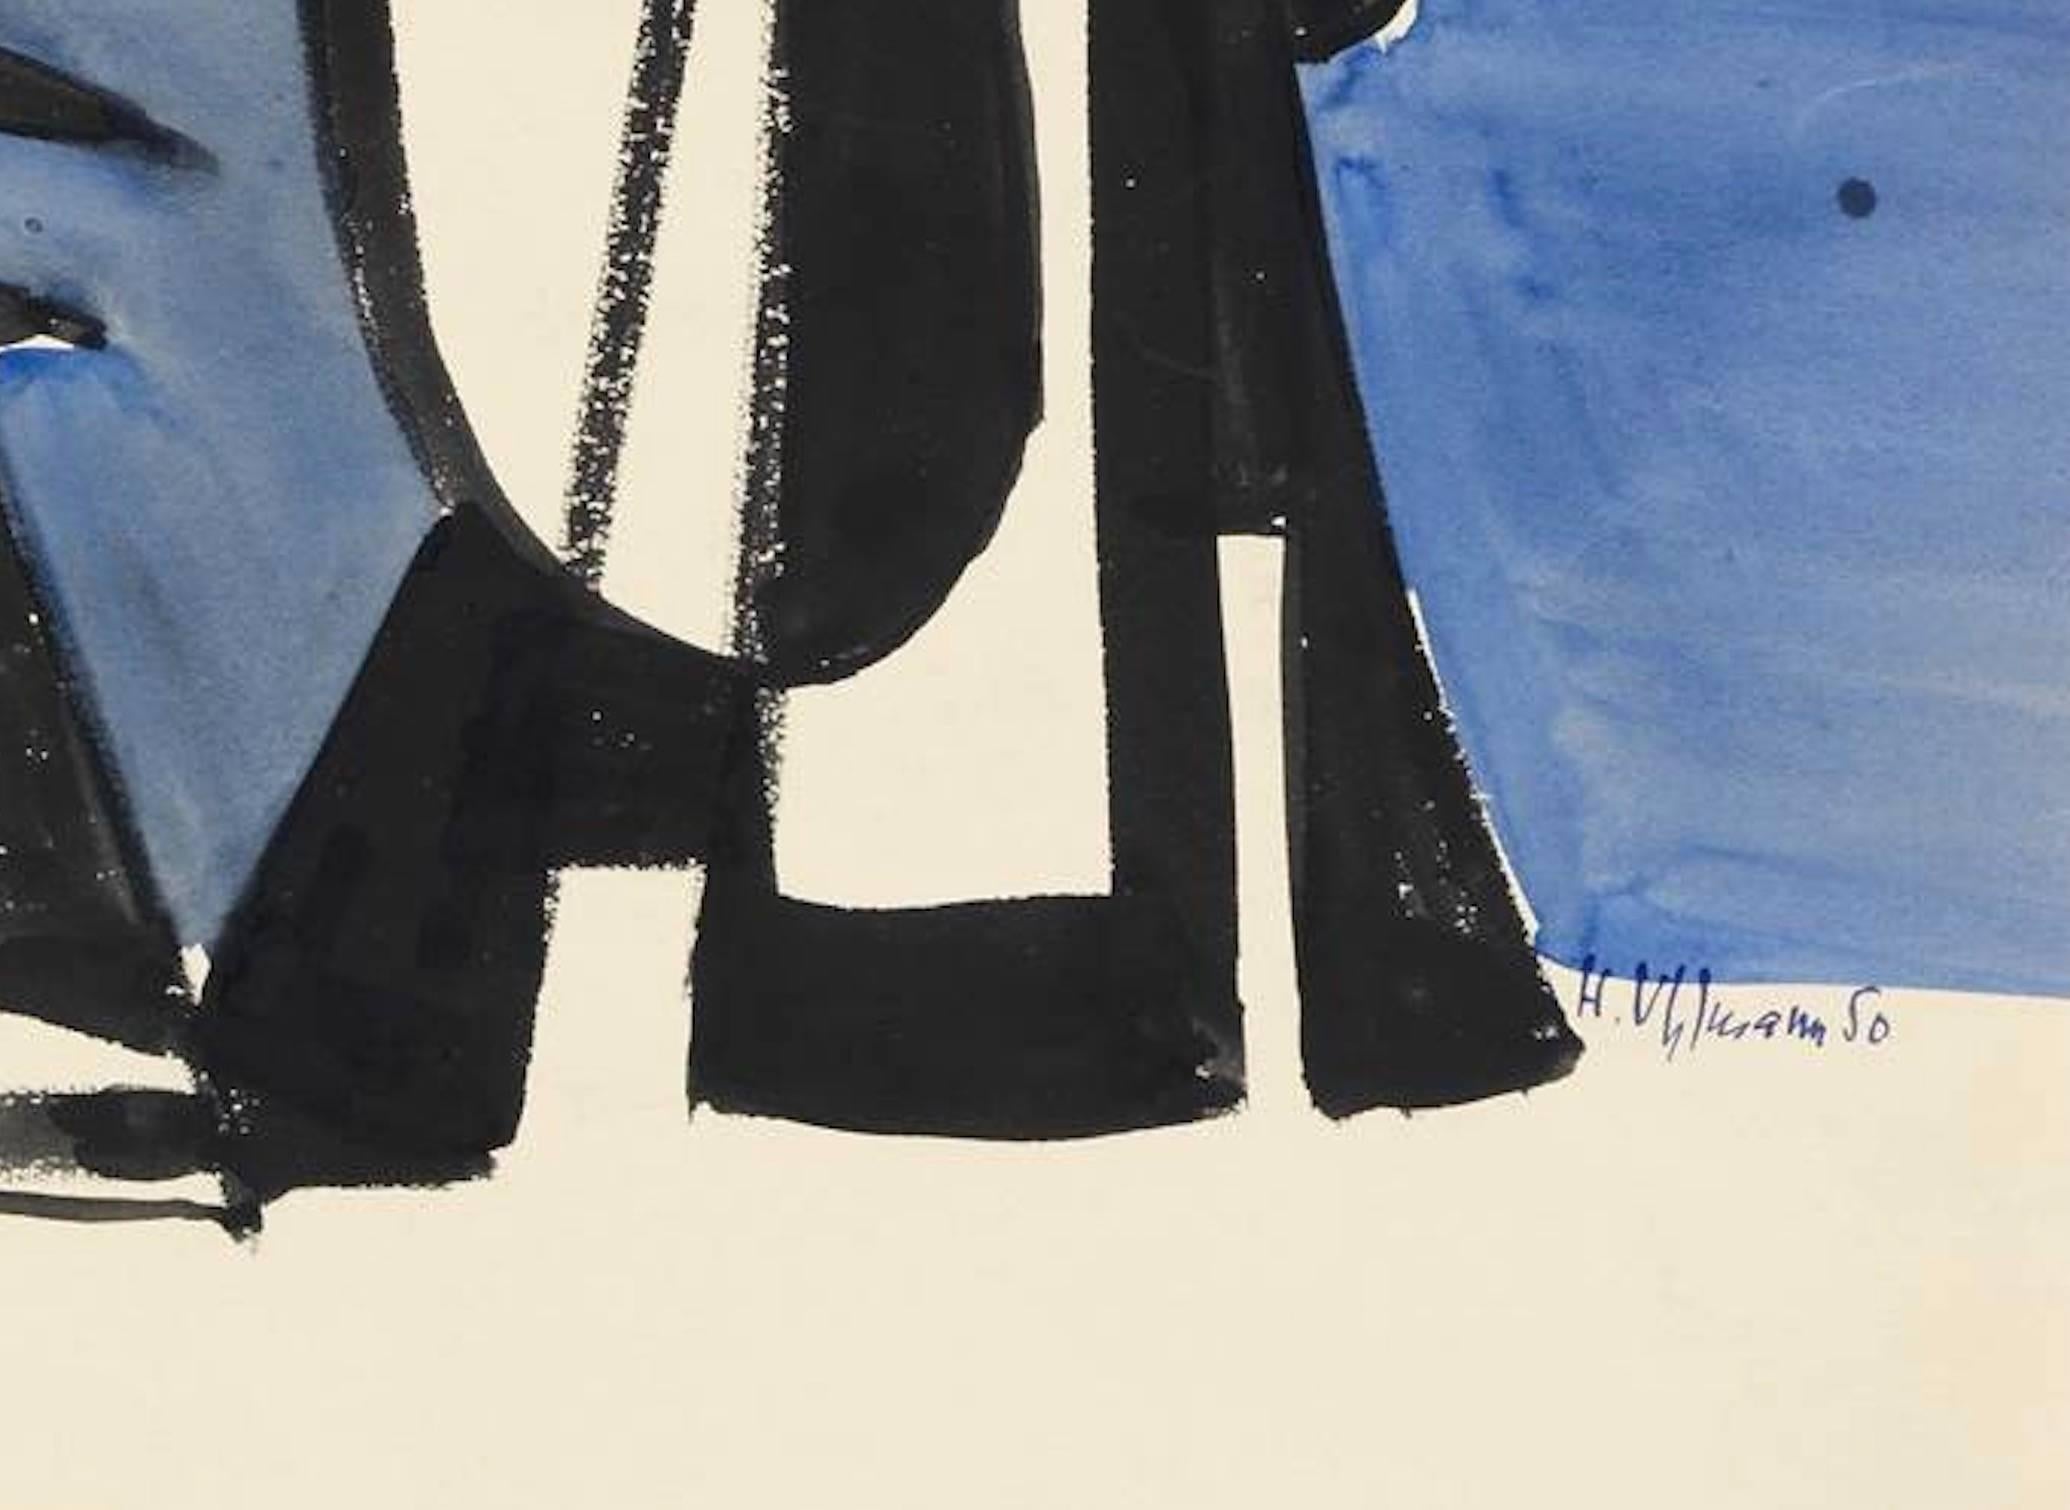 Hans Uhlmann, Untitled, 1950, Ink and watercolor on paper, 37.5 x 52.5 cm,
signed and dated lower right. 

Exhibitions: 
Hans Uhlmann, 1900 - 1975, Skulpturen und Zeichnungen, Galerie Michael Haas, Berlin, 08.03. - 13.04.2013;
Hans Uhlmann,